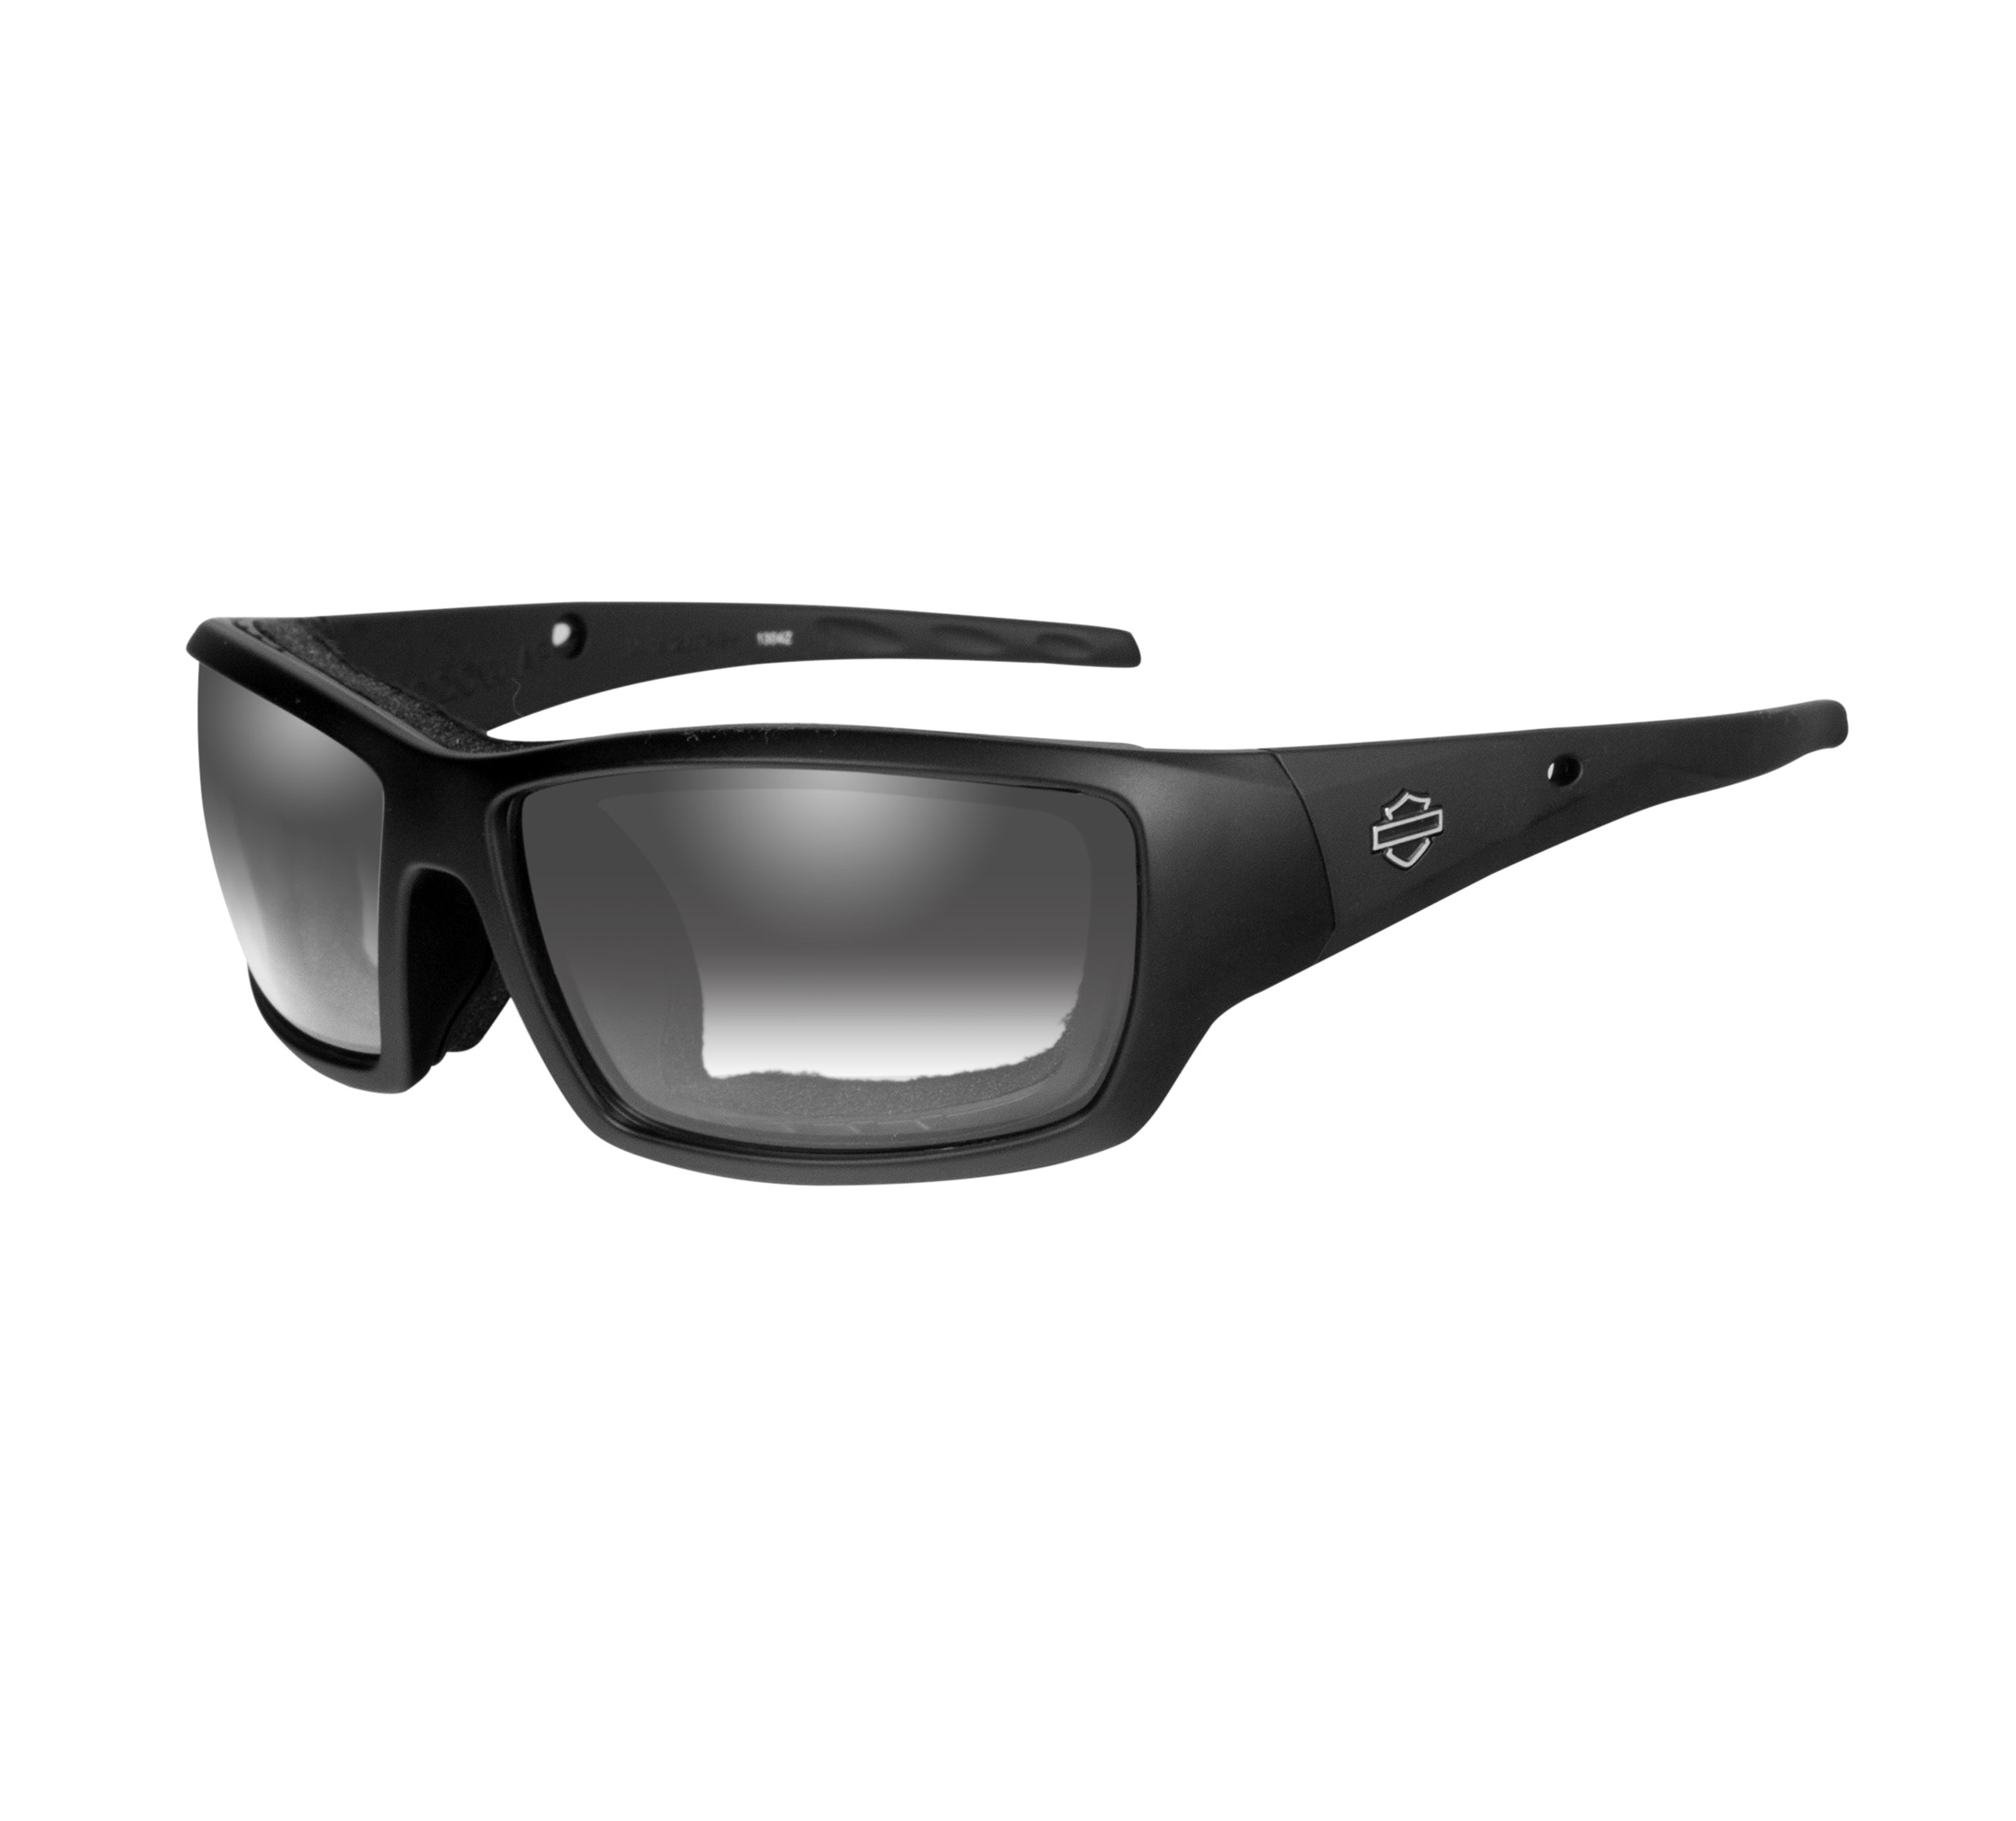 Harley-Davidson HD1303 Motorcycle Safety Glasses Black/Silver for sale online 